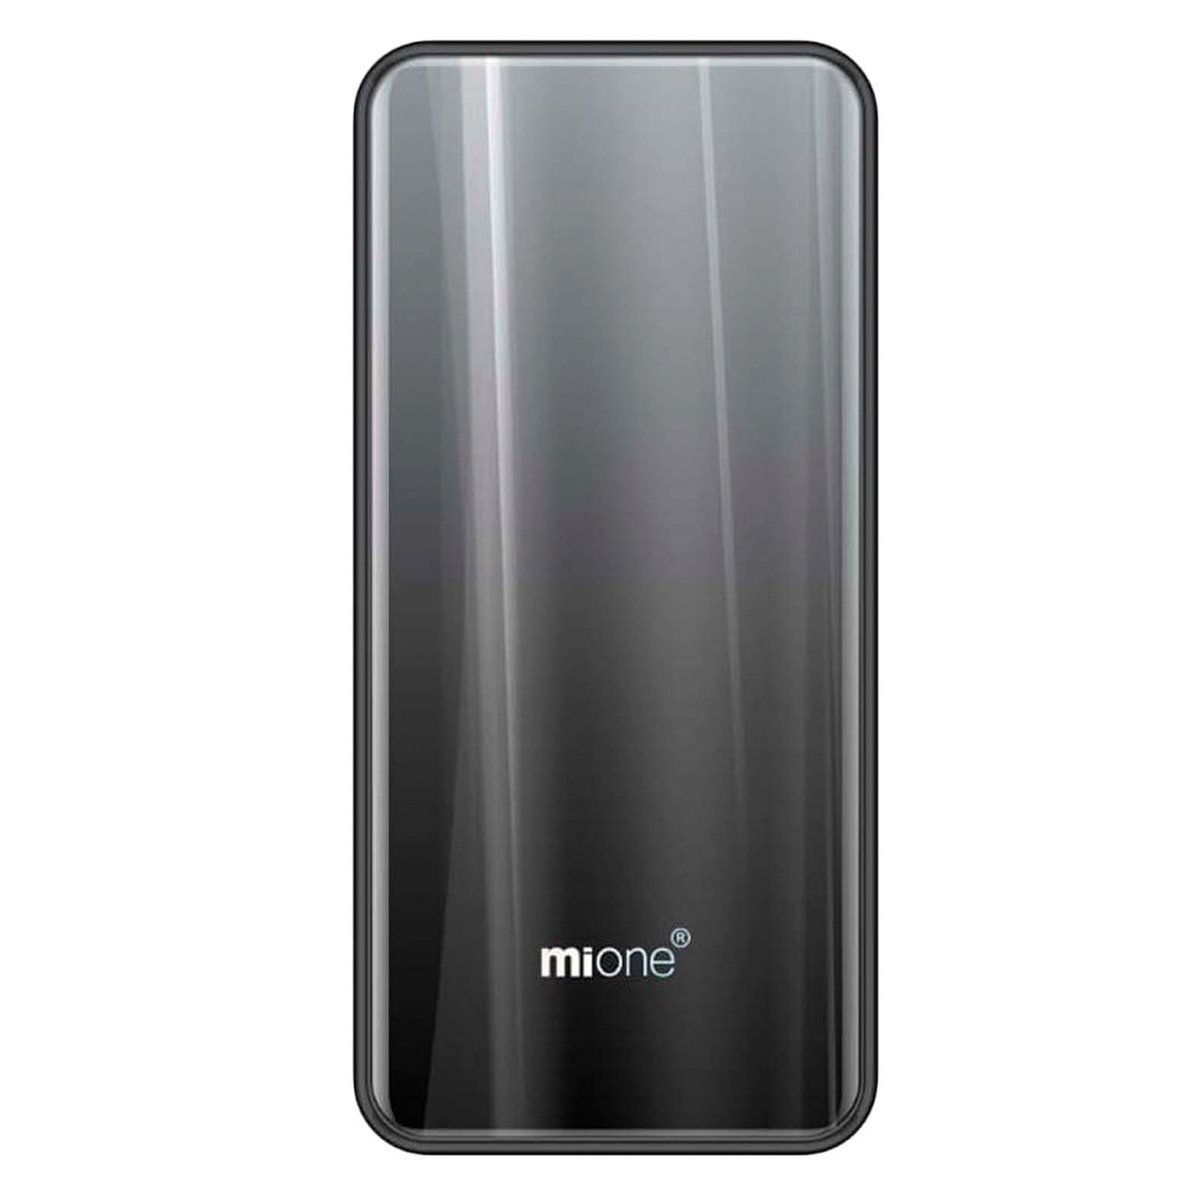 Dupad Mione Pro 4G No Camera No GPS 1.6Ghz Octa-Core, 4GB RAM, 64GB ROM,Trans Silver